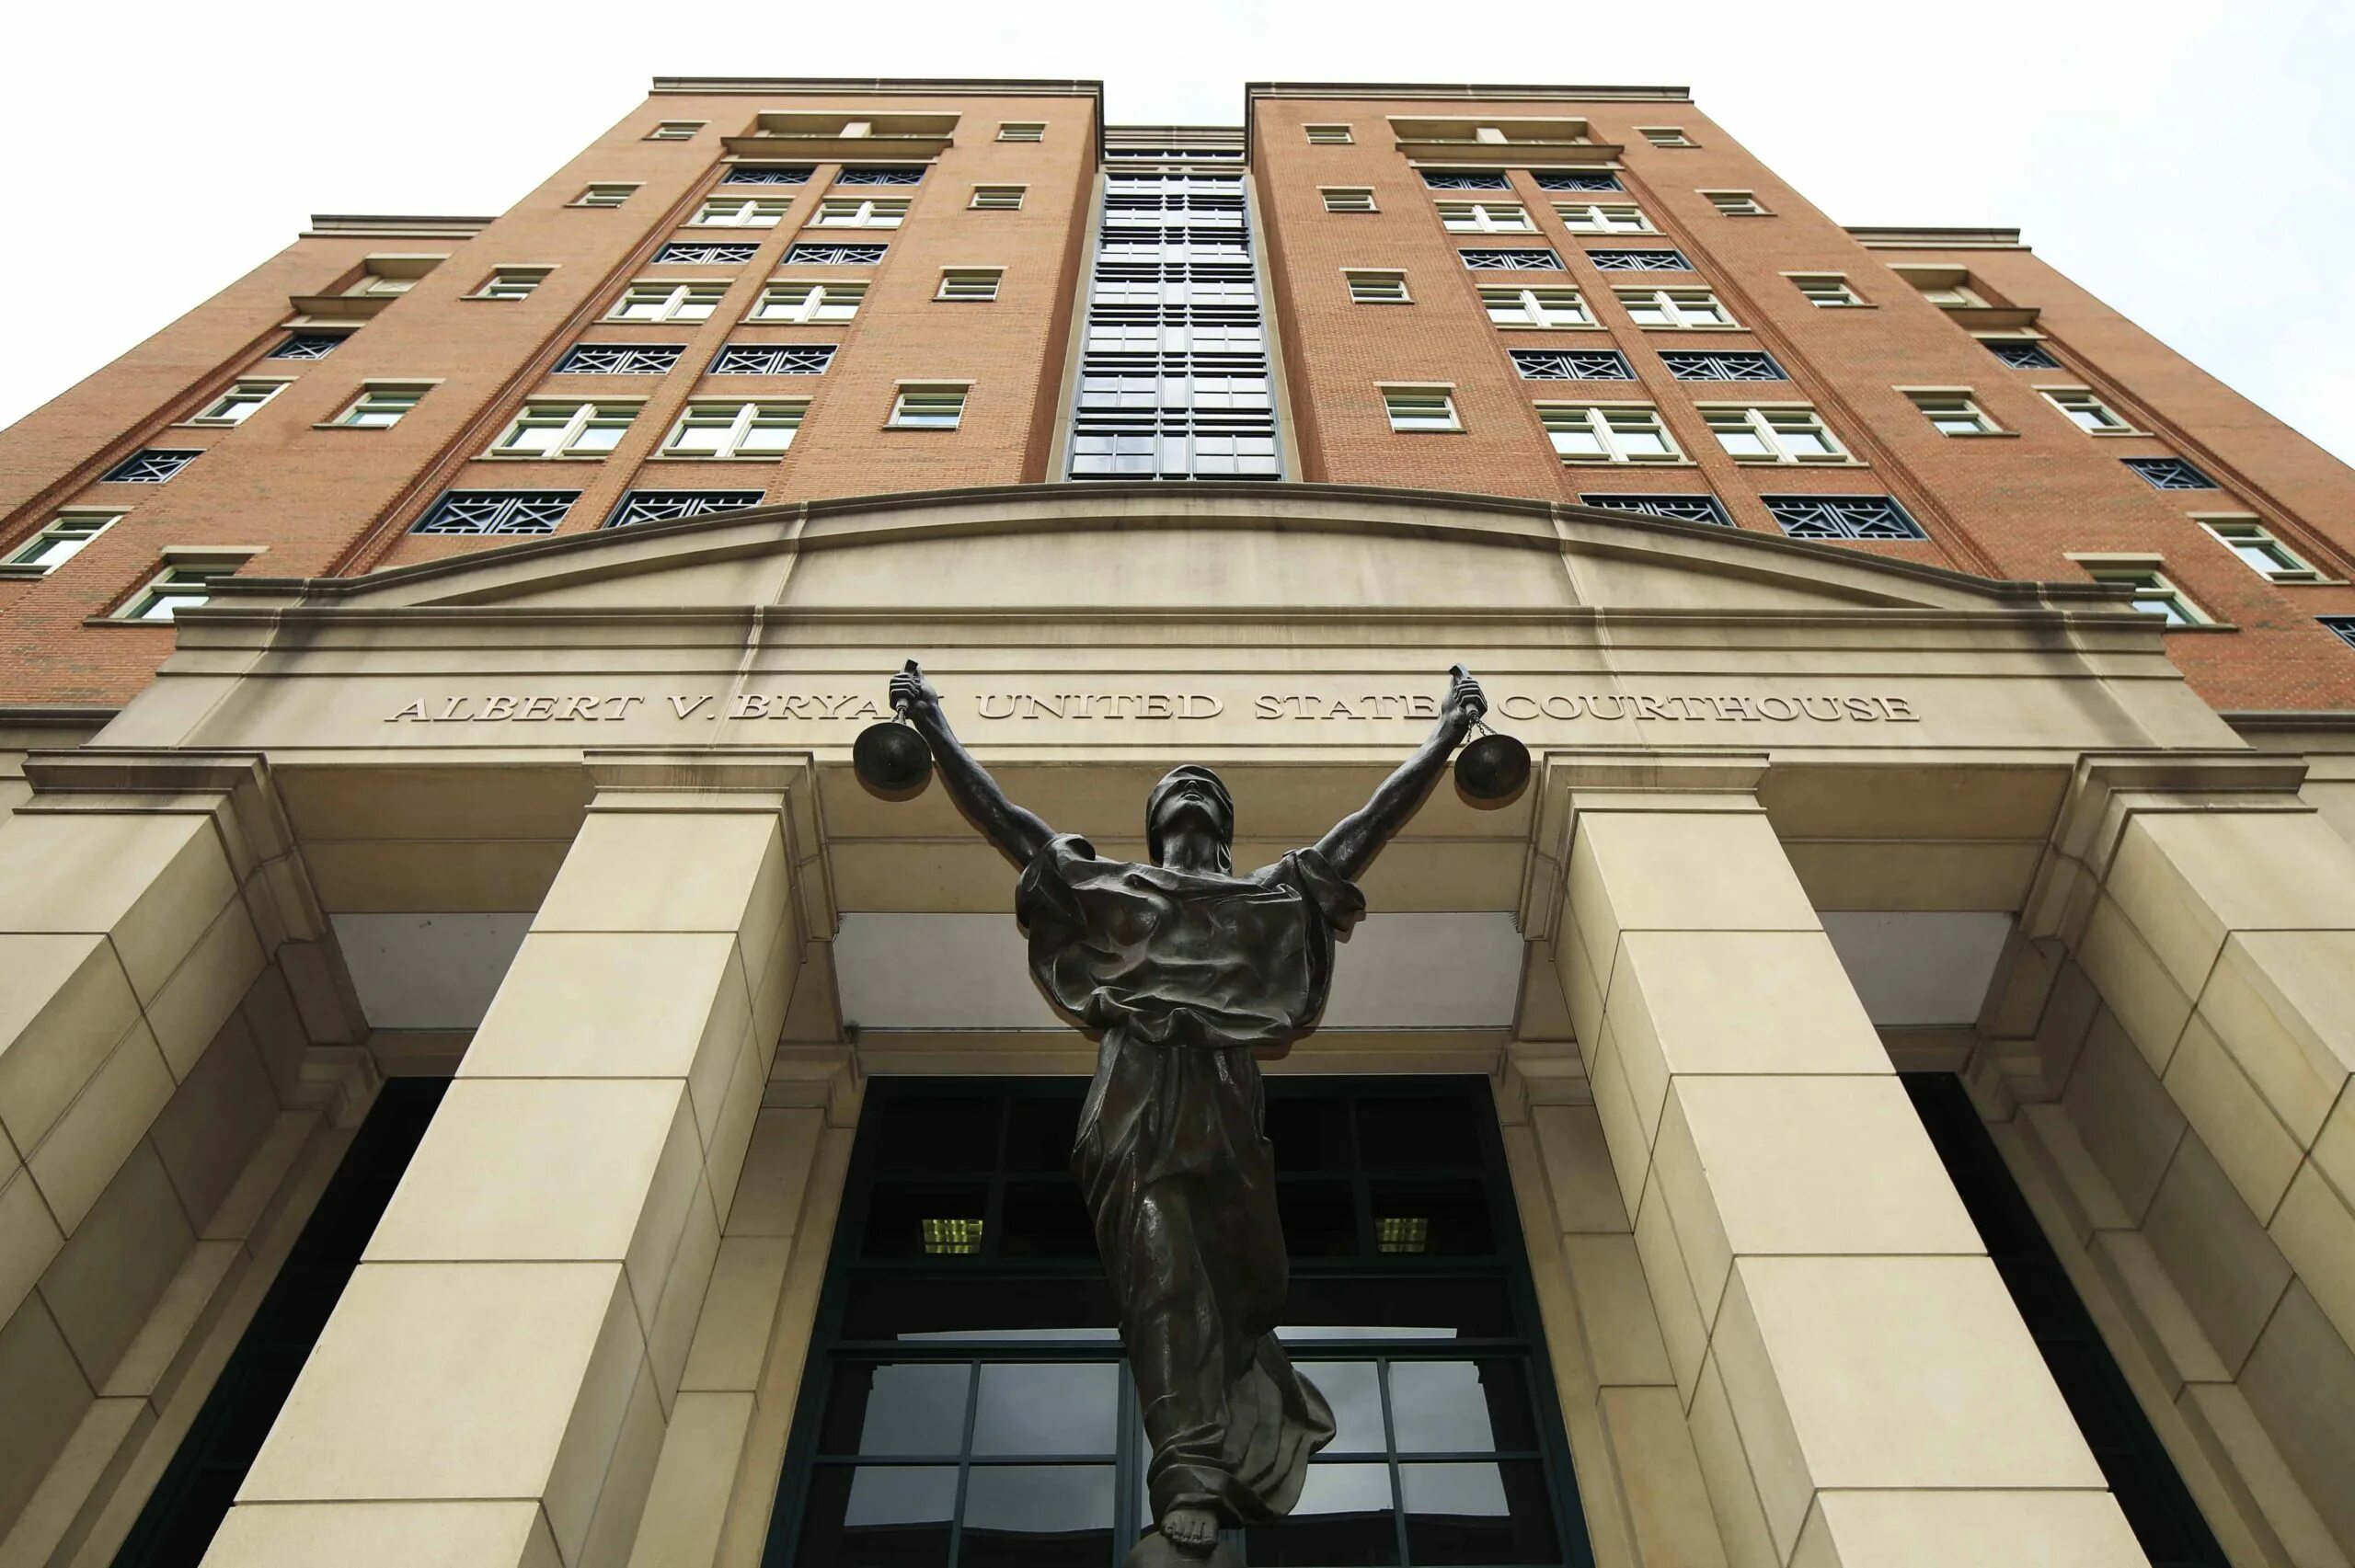 Срок в здание суда. Статуя на суде в США. Статуя на здании суда в Америке. Новая статуя на здании суда в Нью-Йорке. United States Courthouse.